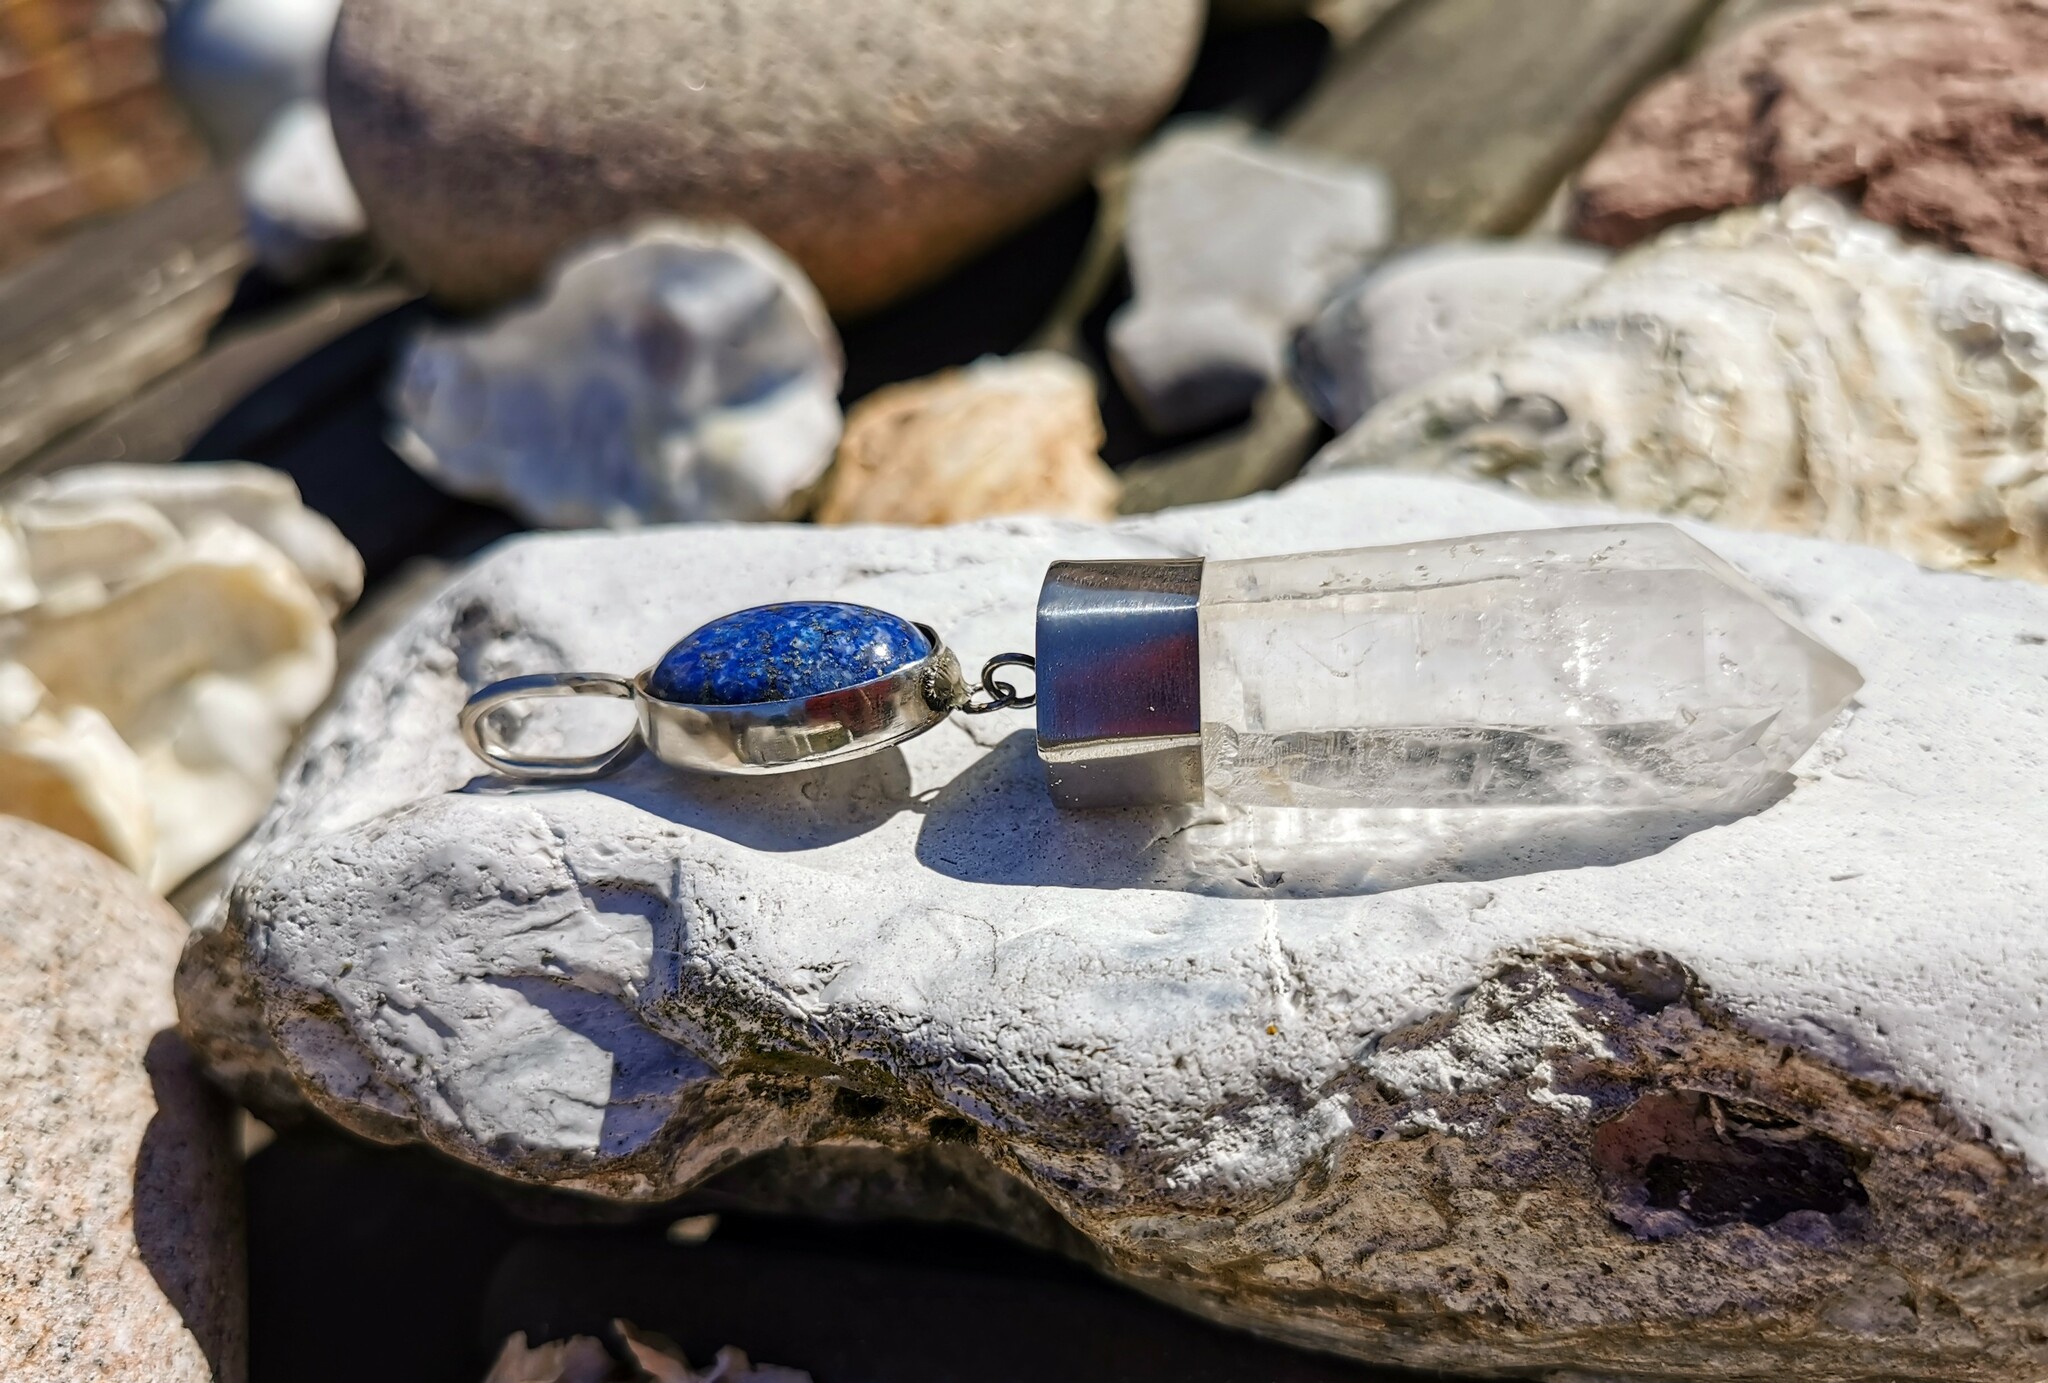 Lapiz lazuli med kraftfull laserstav bergkristall